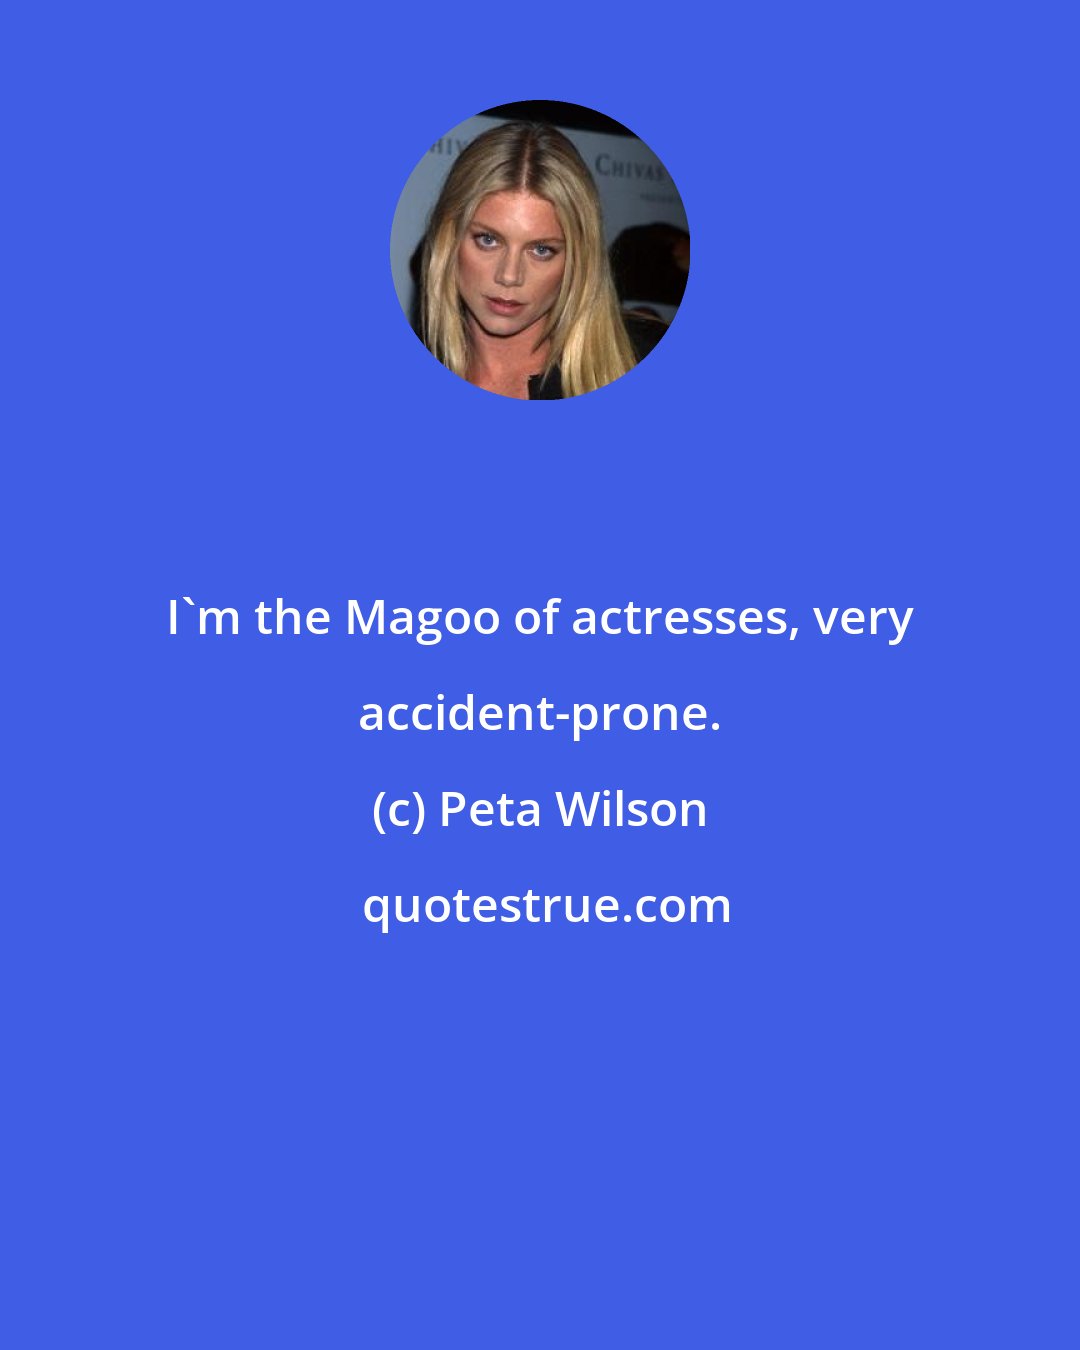 Peta Wilson: I'm the Magoo of actresses, very accident-prone.